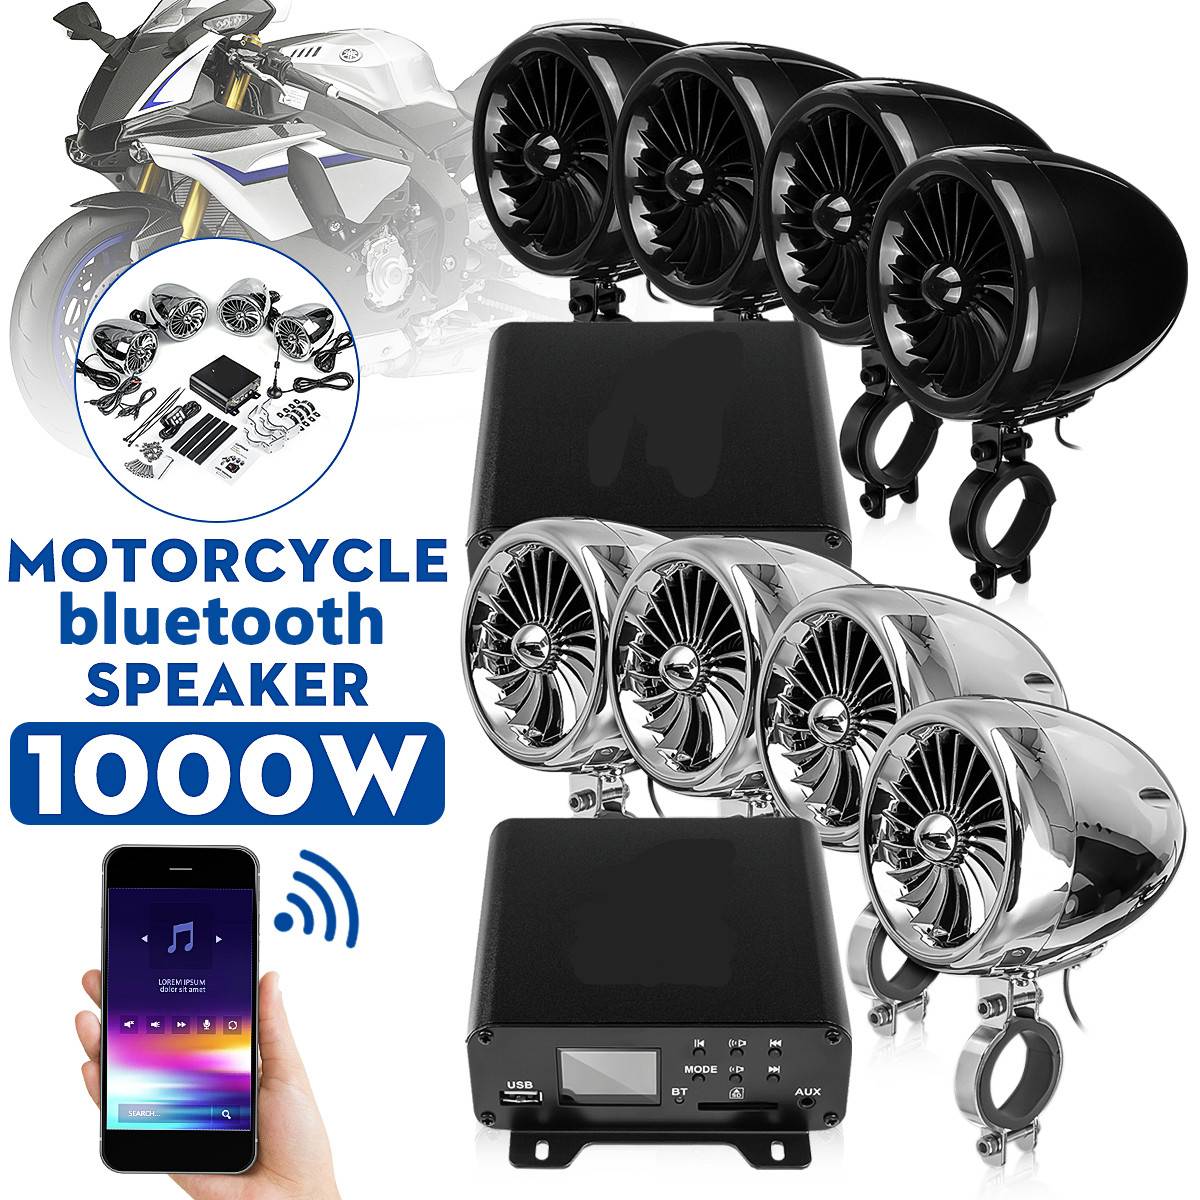 1000W Audio Amplifier Stereo With 4 Speakers Waterproof bluetooth For ATV UTV Motorcycle Electric Bike Marine Boat